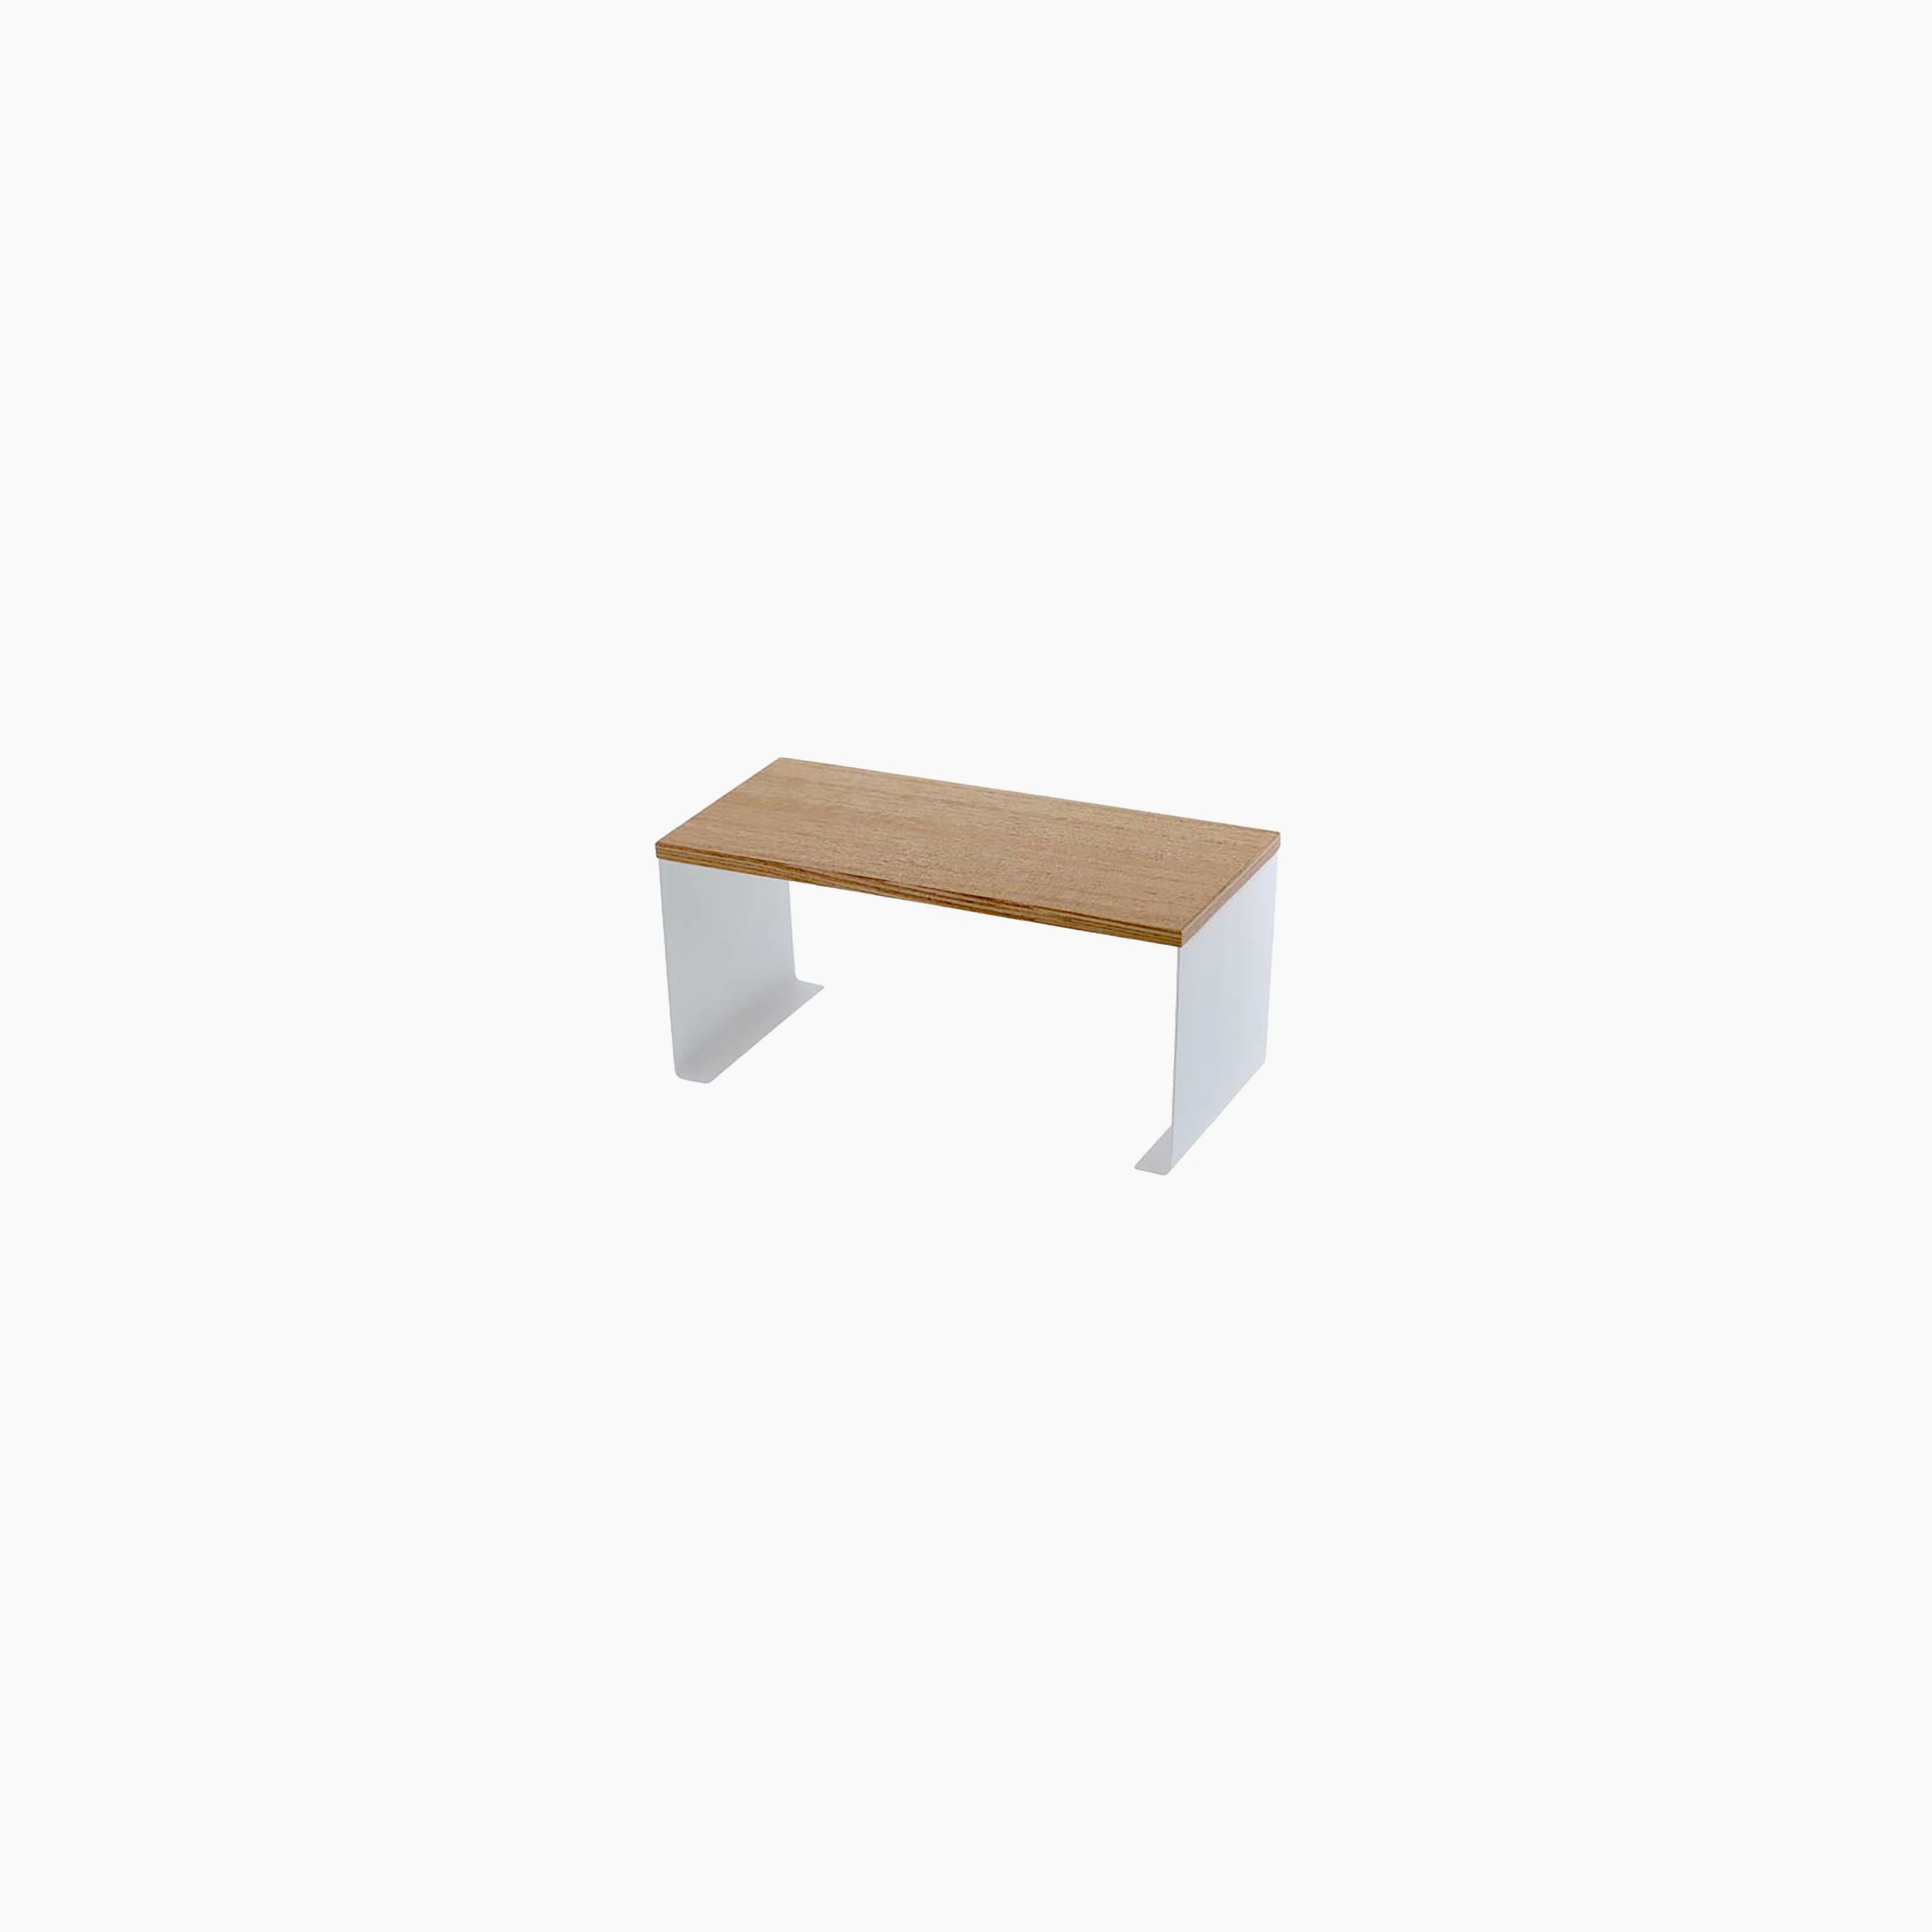 Stackable Countertop Shelf - Two Sizes - Steel + Wood